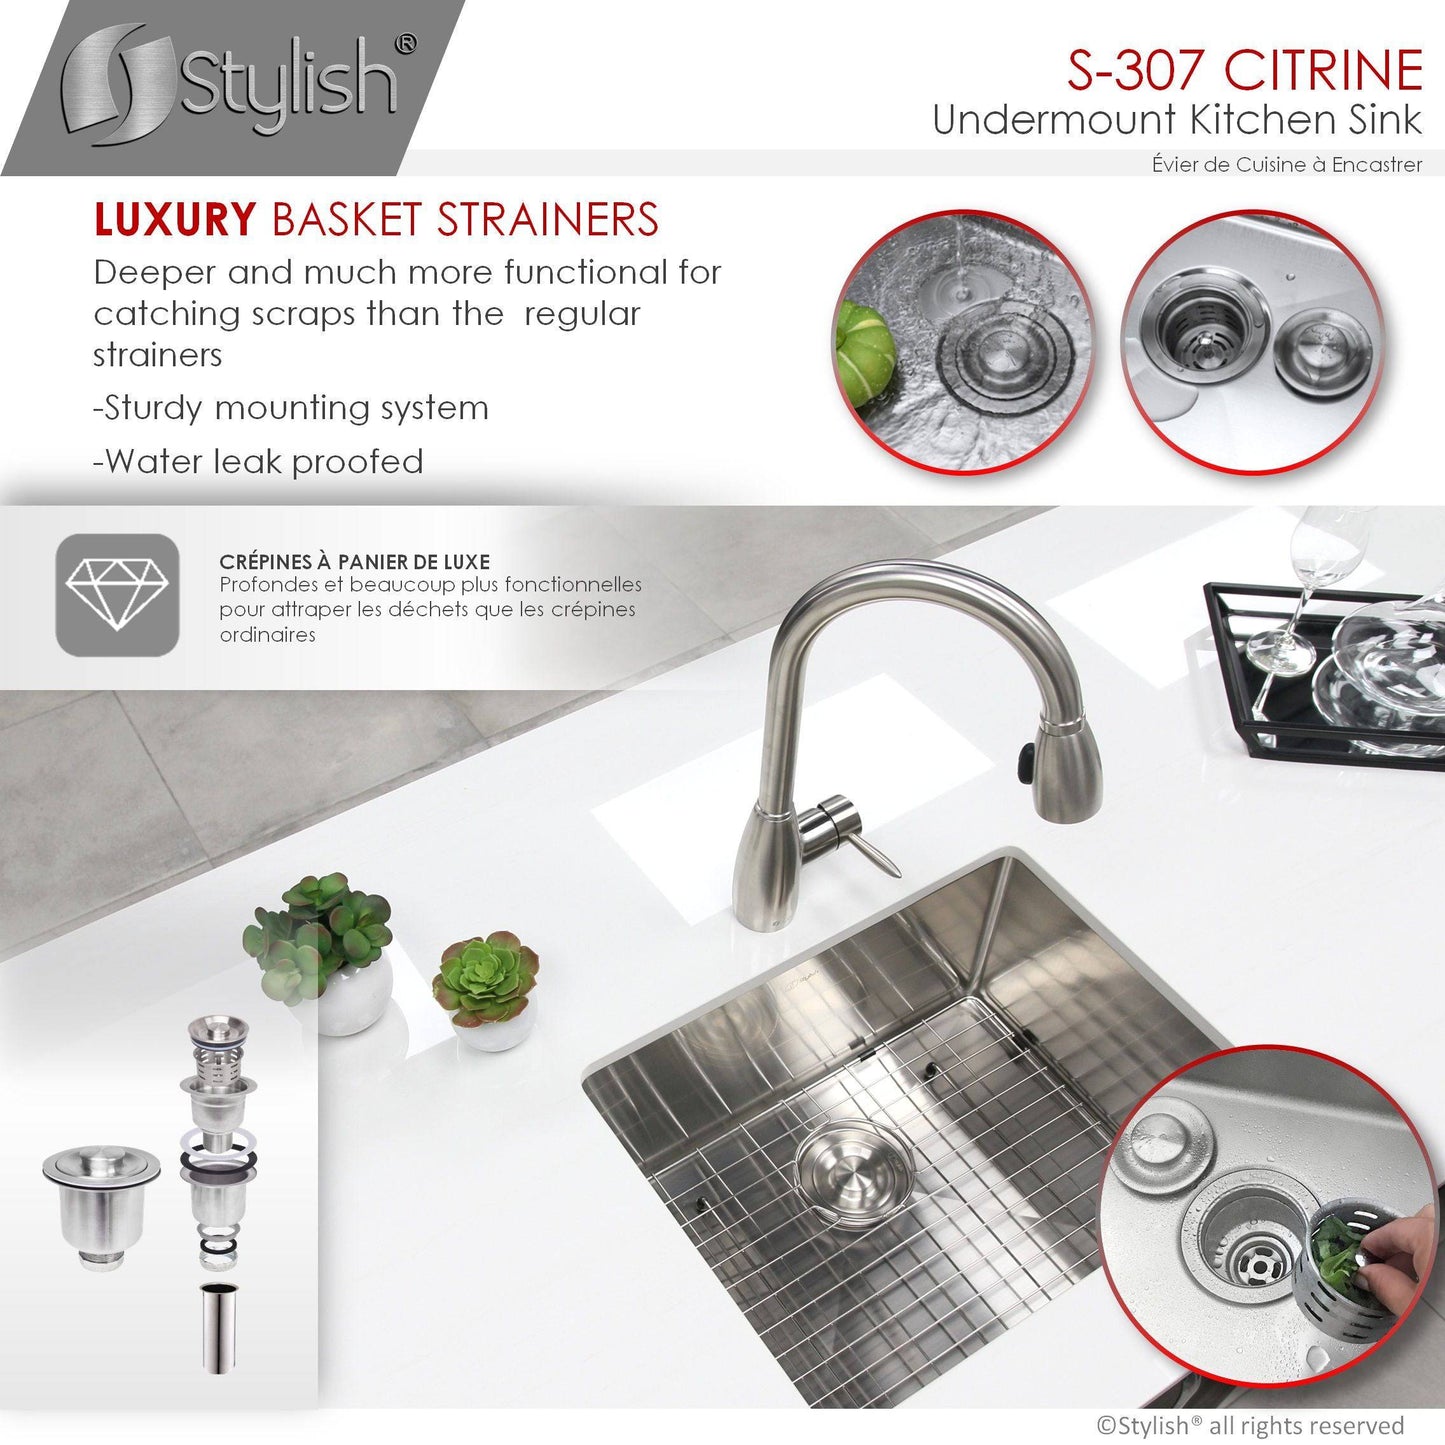 Stylish Citrine 23" x 18" Single Bowl Undermount Stainless Steel Kitchen Sink S-307XG